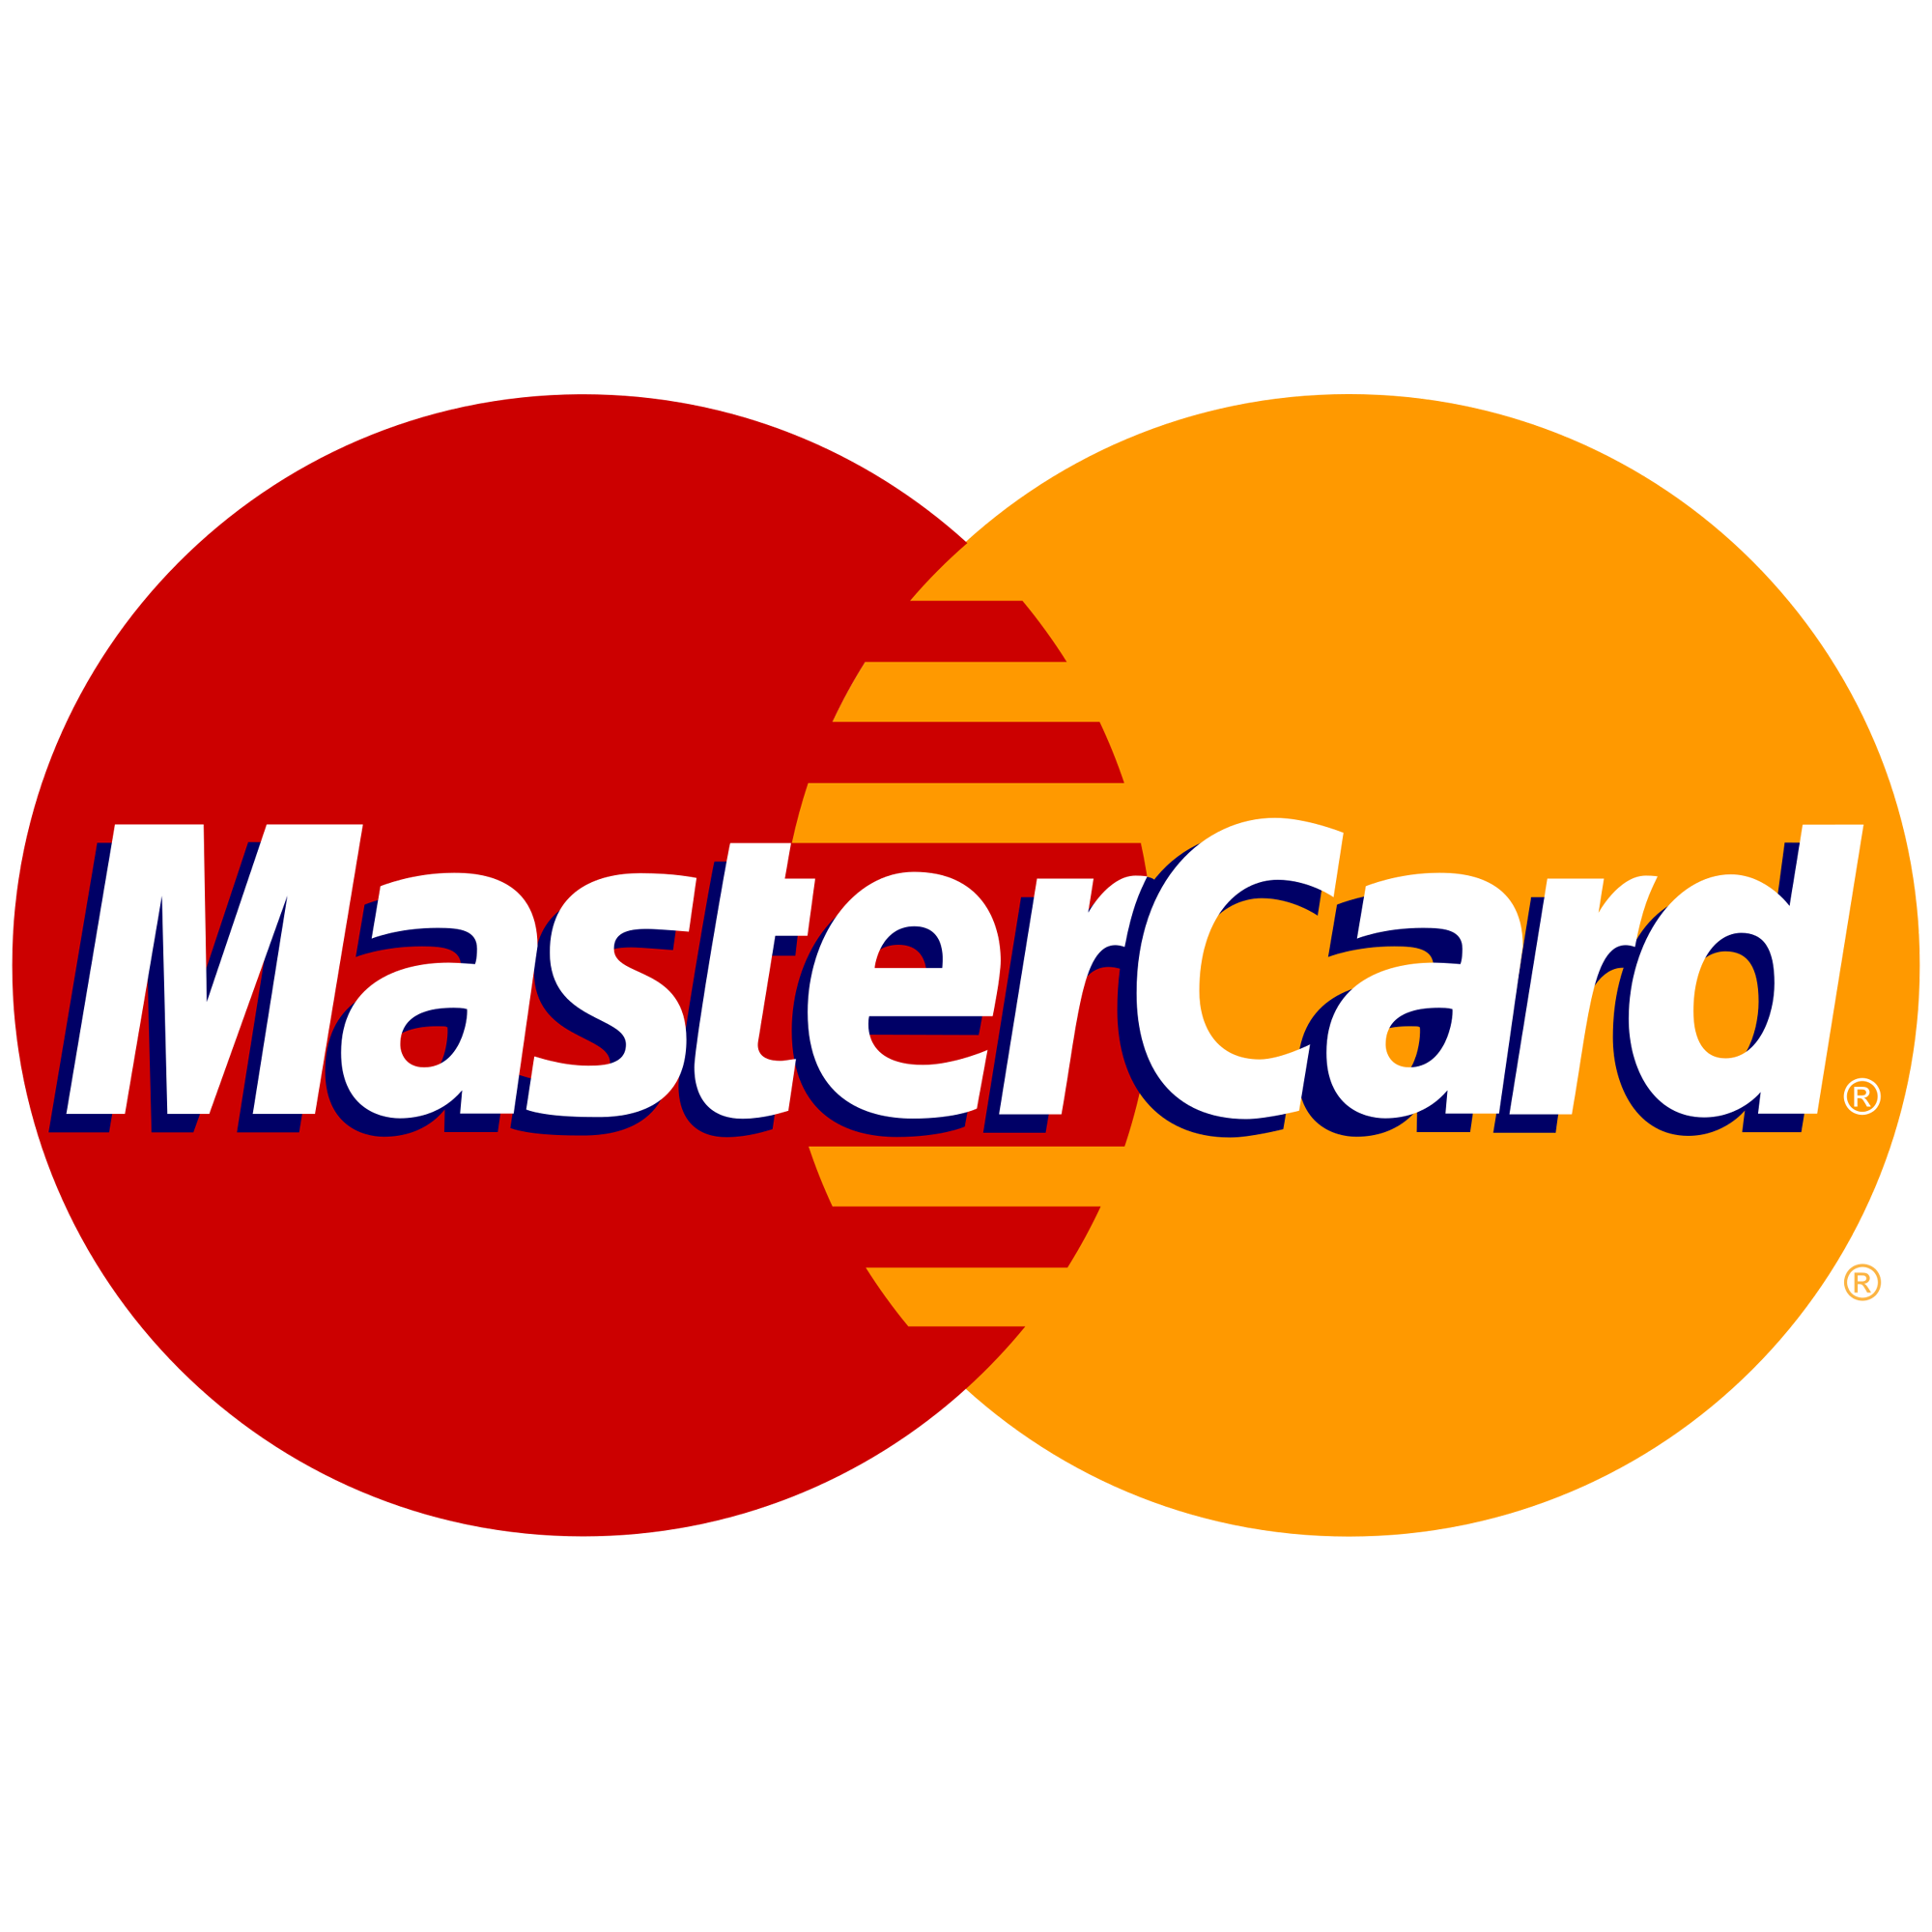 Master Card Logo Transparent Picture